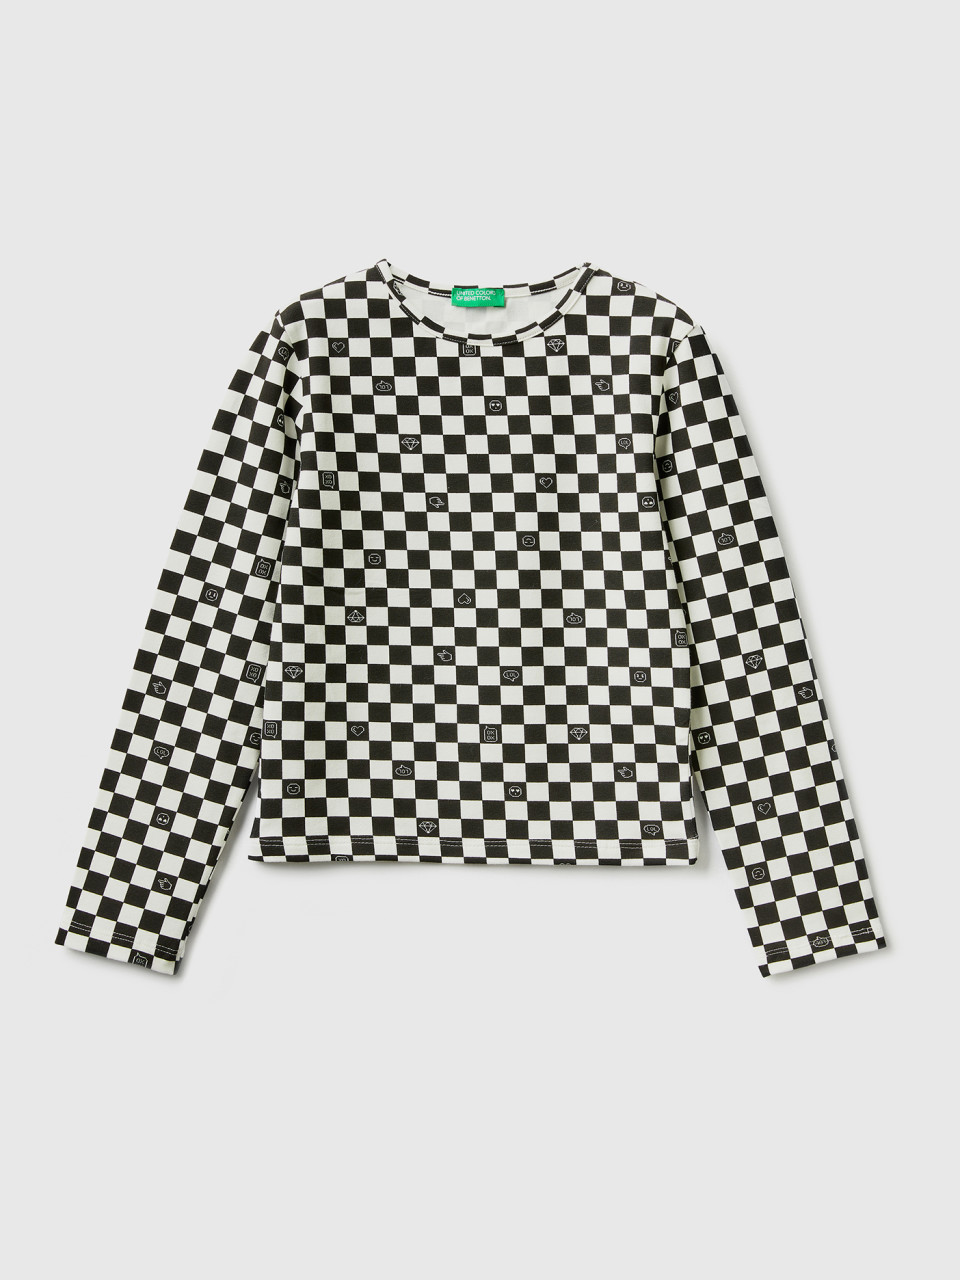 Benetton, Checkered Stretch Cotton T-shirt, Black, Kids